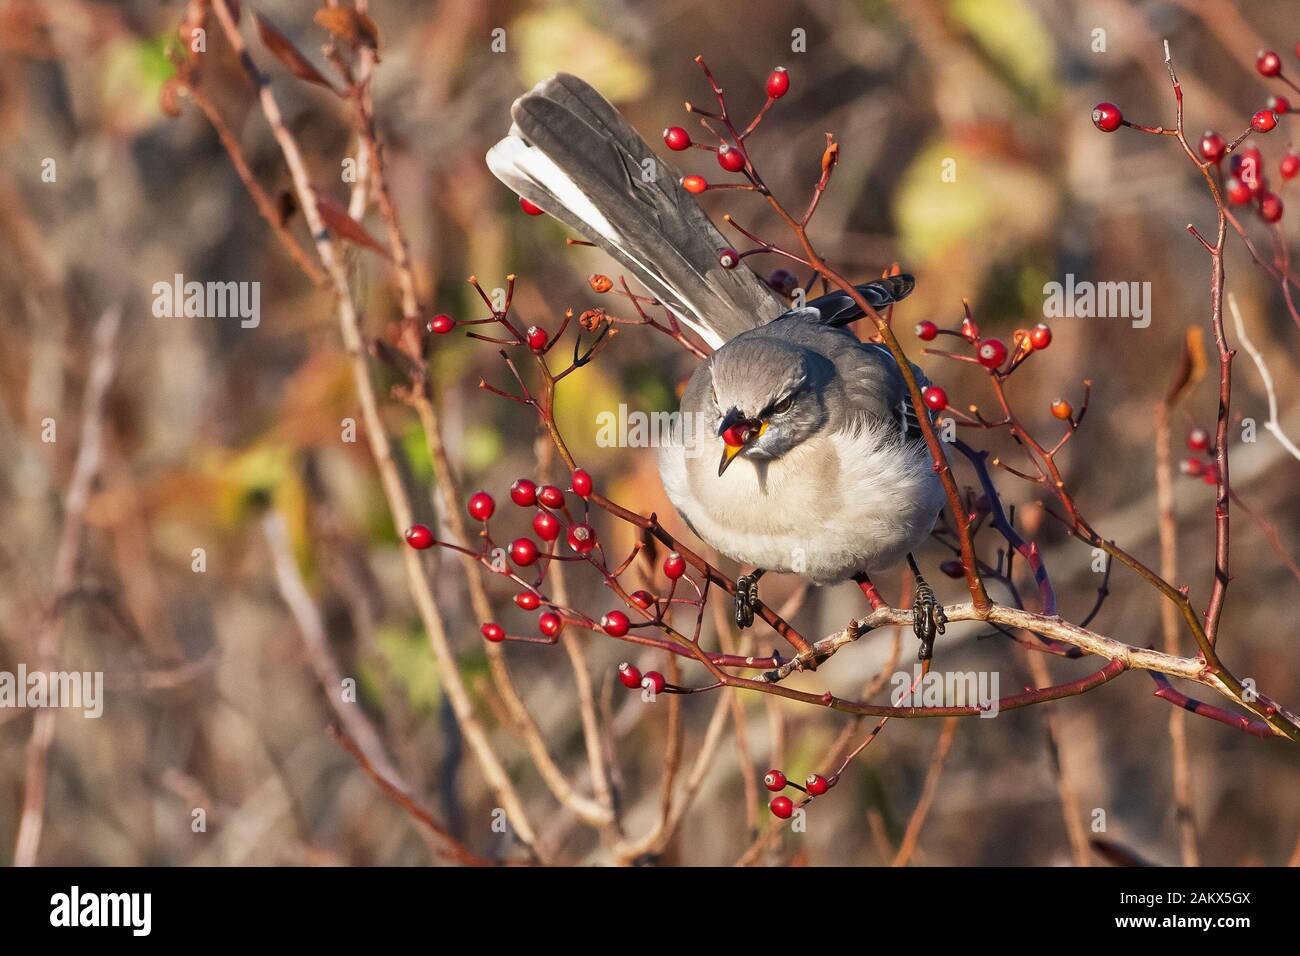 Northern mockingbird feeding on berries Stock Photo